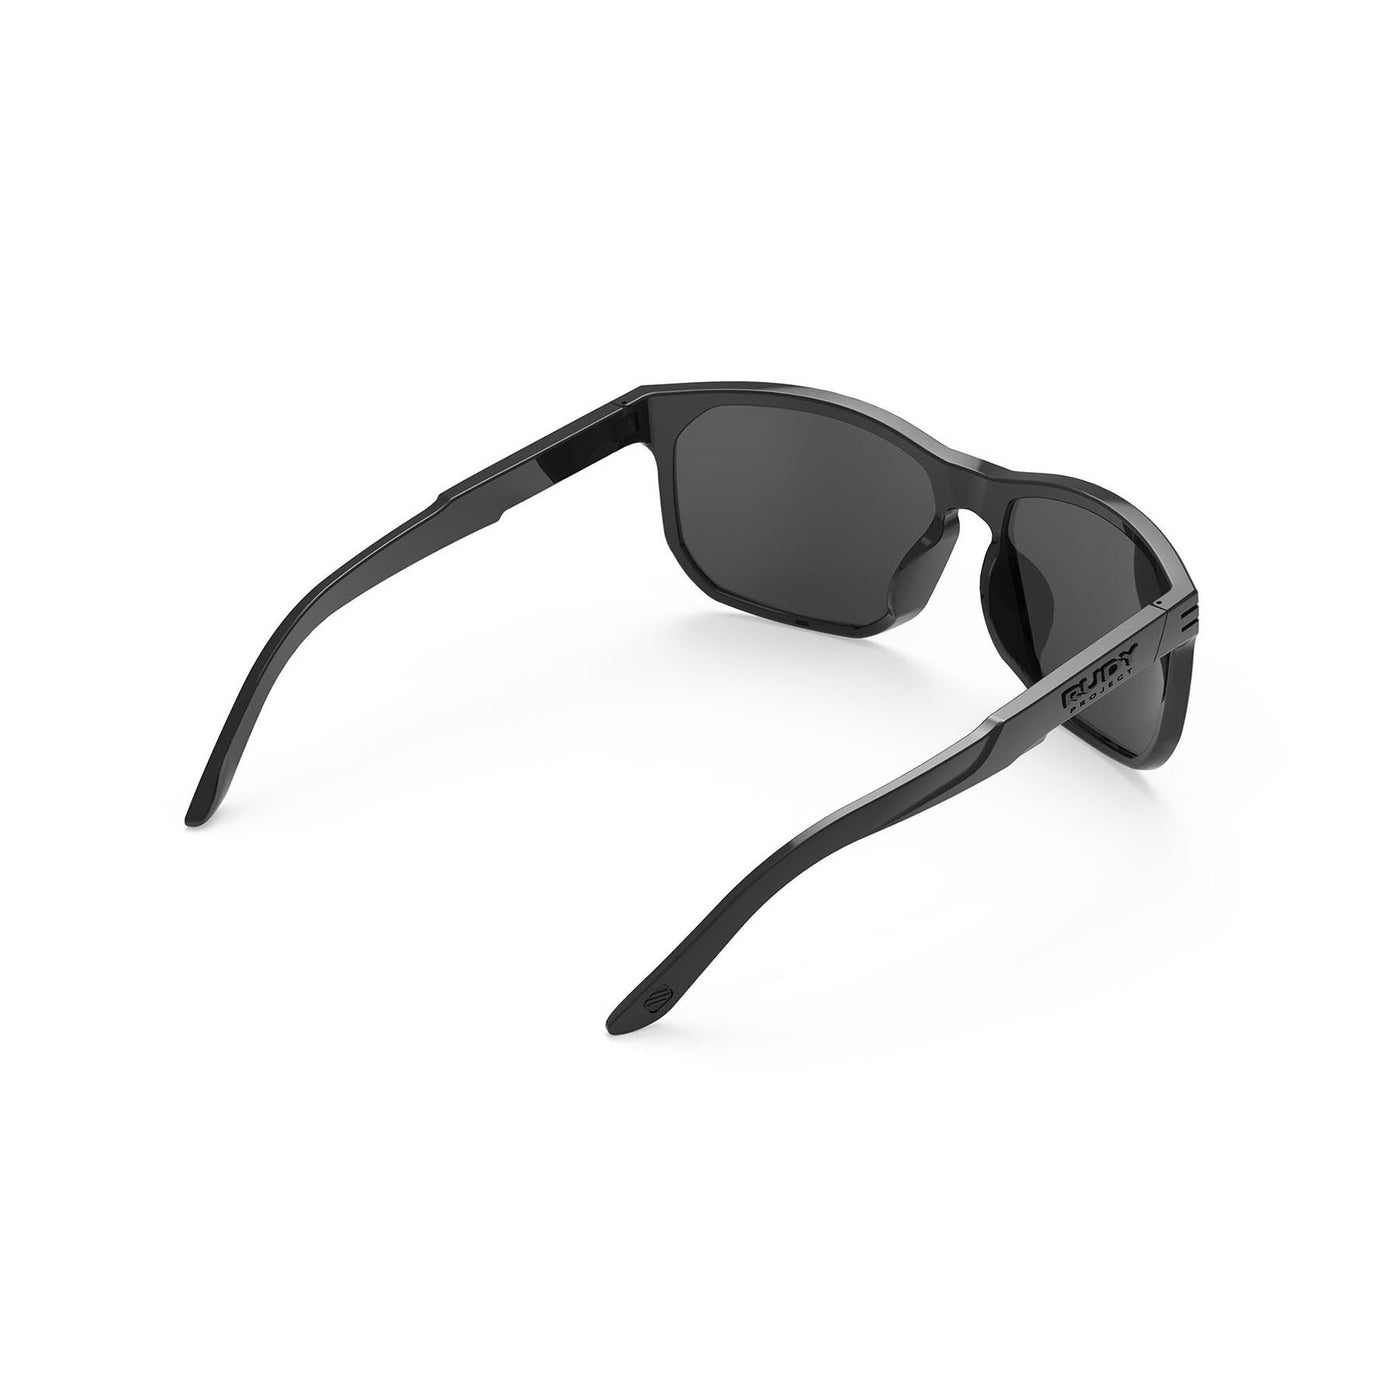 Rudy Project Soundrise lifestyle and beach prescription sunglasses#color_soundrise-black-gloss-with-smoke-black-lenses